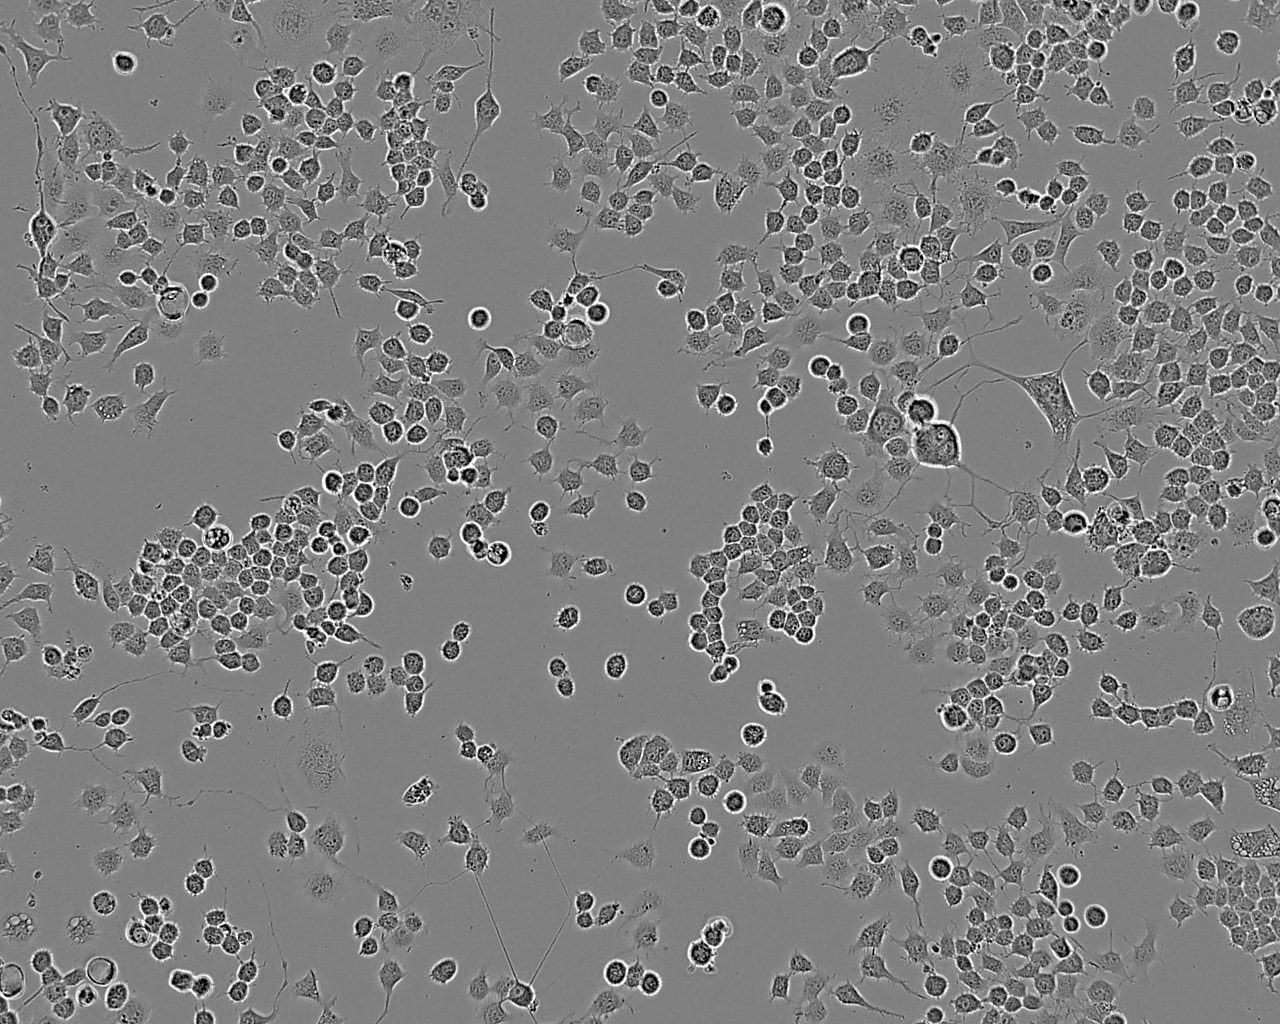 MBT-2 epithelioid cells小鼠膀胱癌细胞系,MBT-2 epithelioid cells